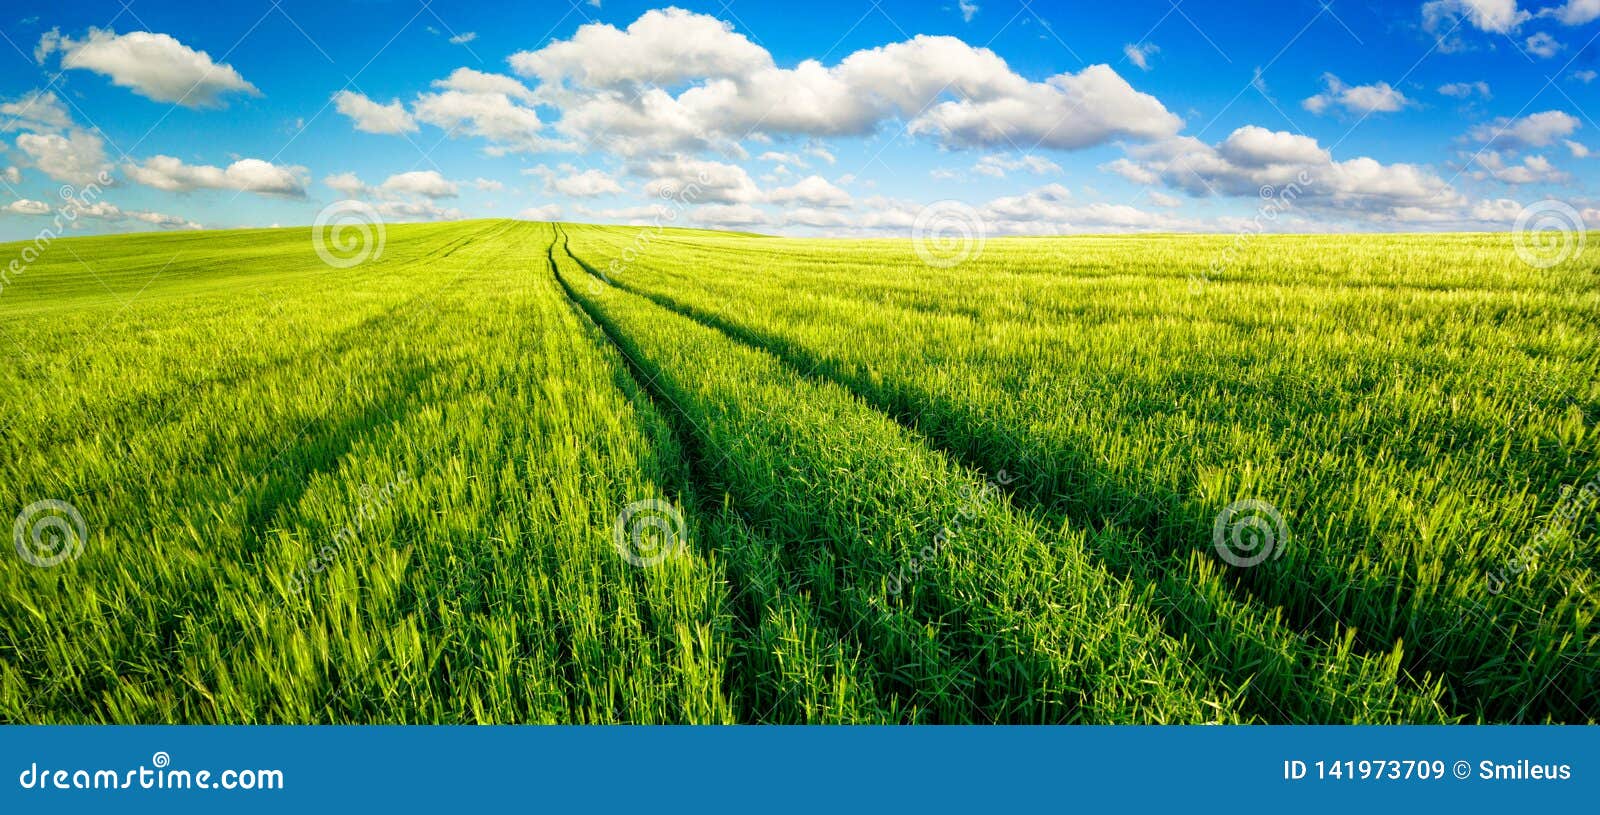 vast green fields panorama with nice blue sky